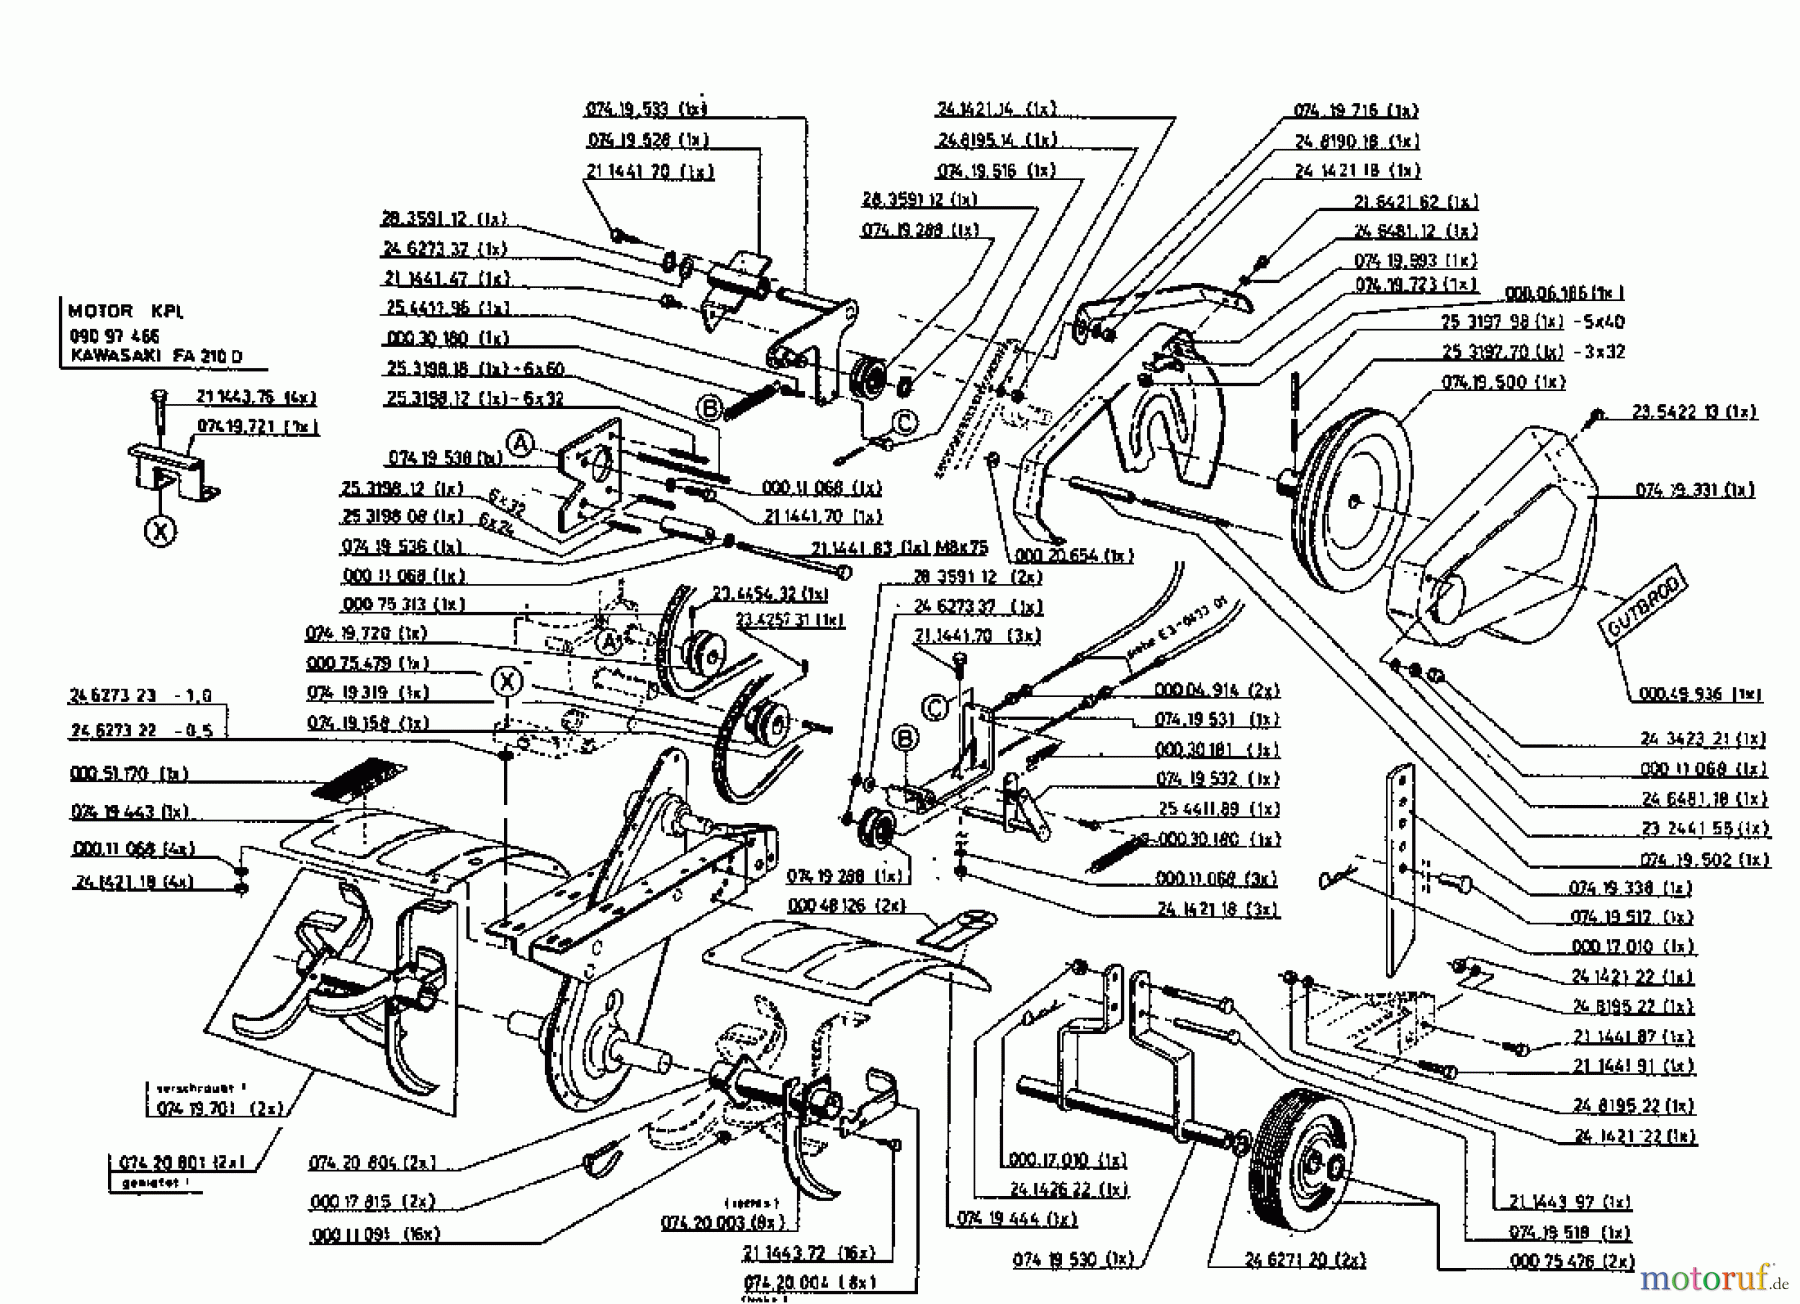  Gutbrod Motobineuse MB 62-52 K 07518.03  (1996) Machine de base